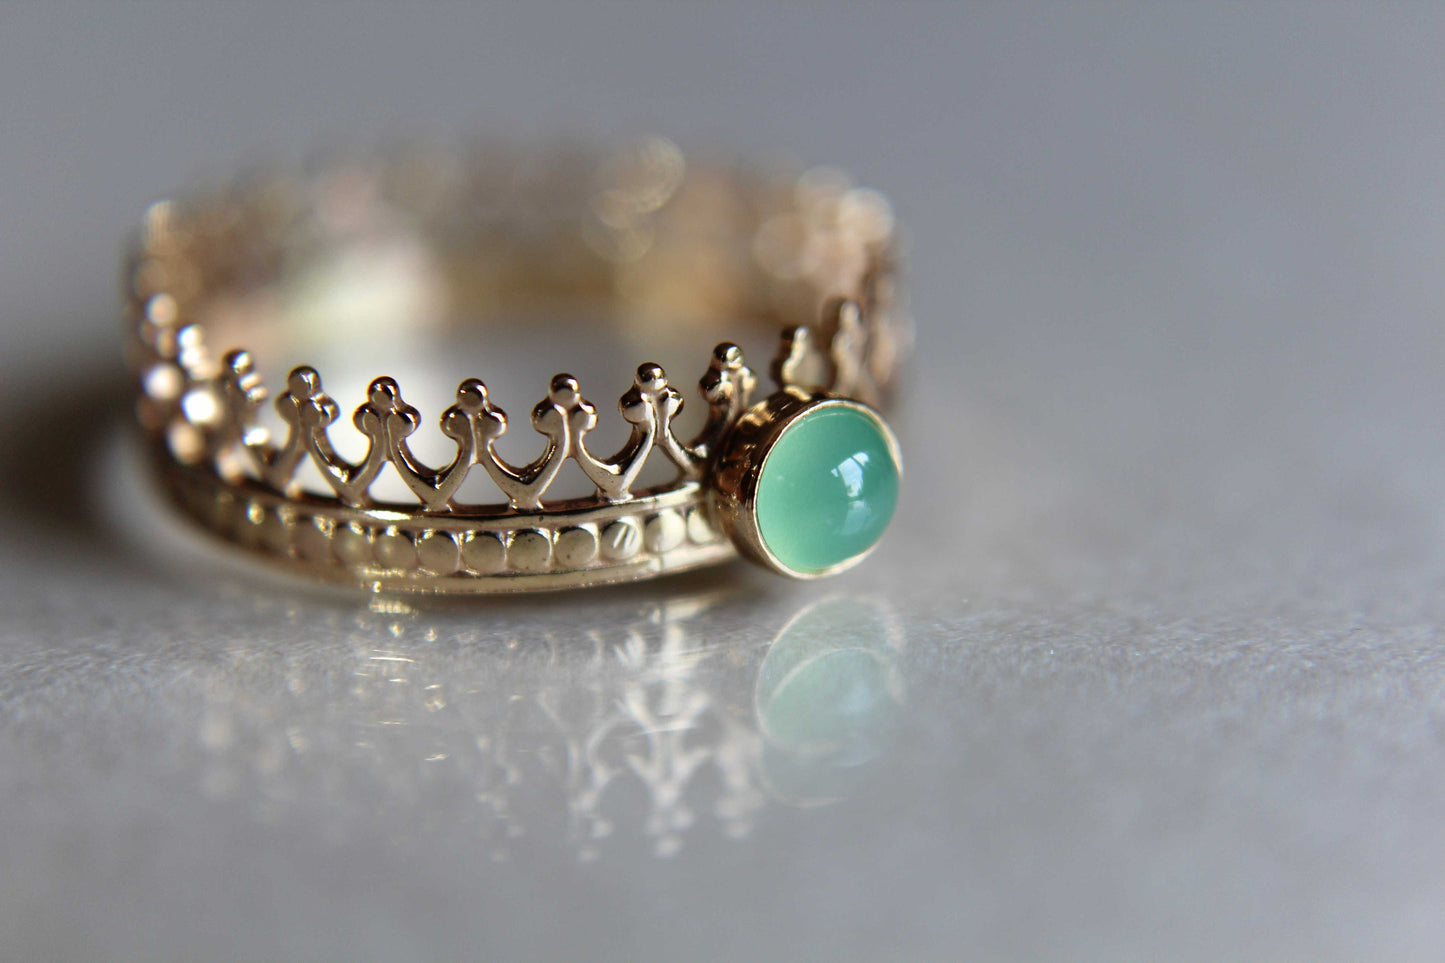 Crown Ring, Wedding Band, Engagement Ring, Princess Ring, Promise Ring, Simple Gift, Chrysoprase Crown Ring, Genuine Gemstone, Gift